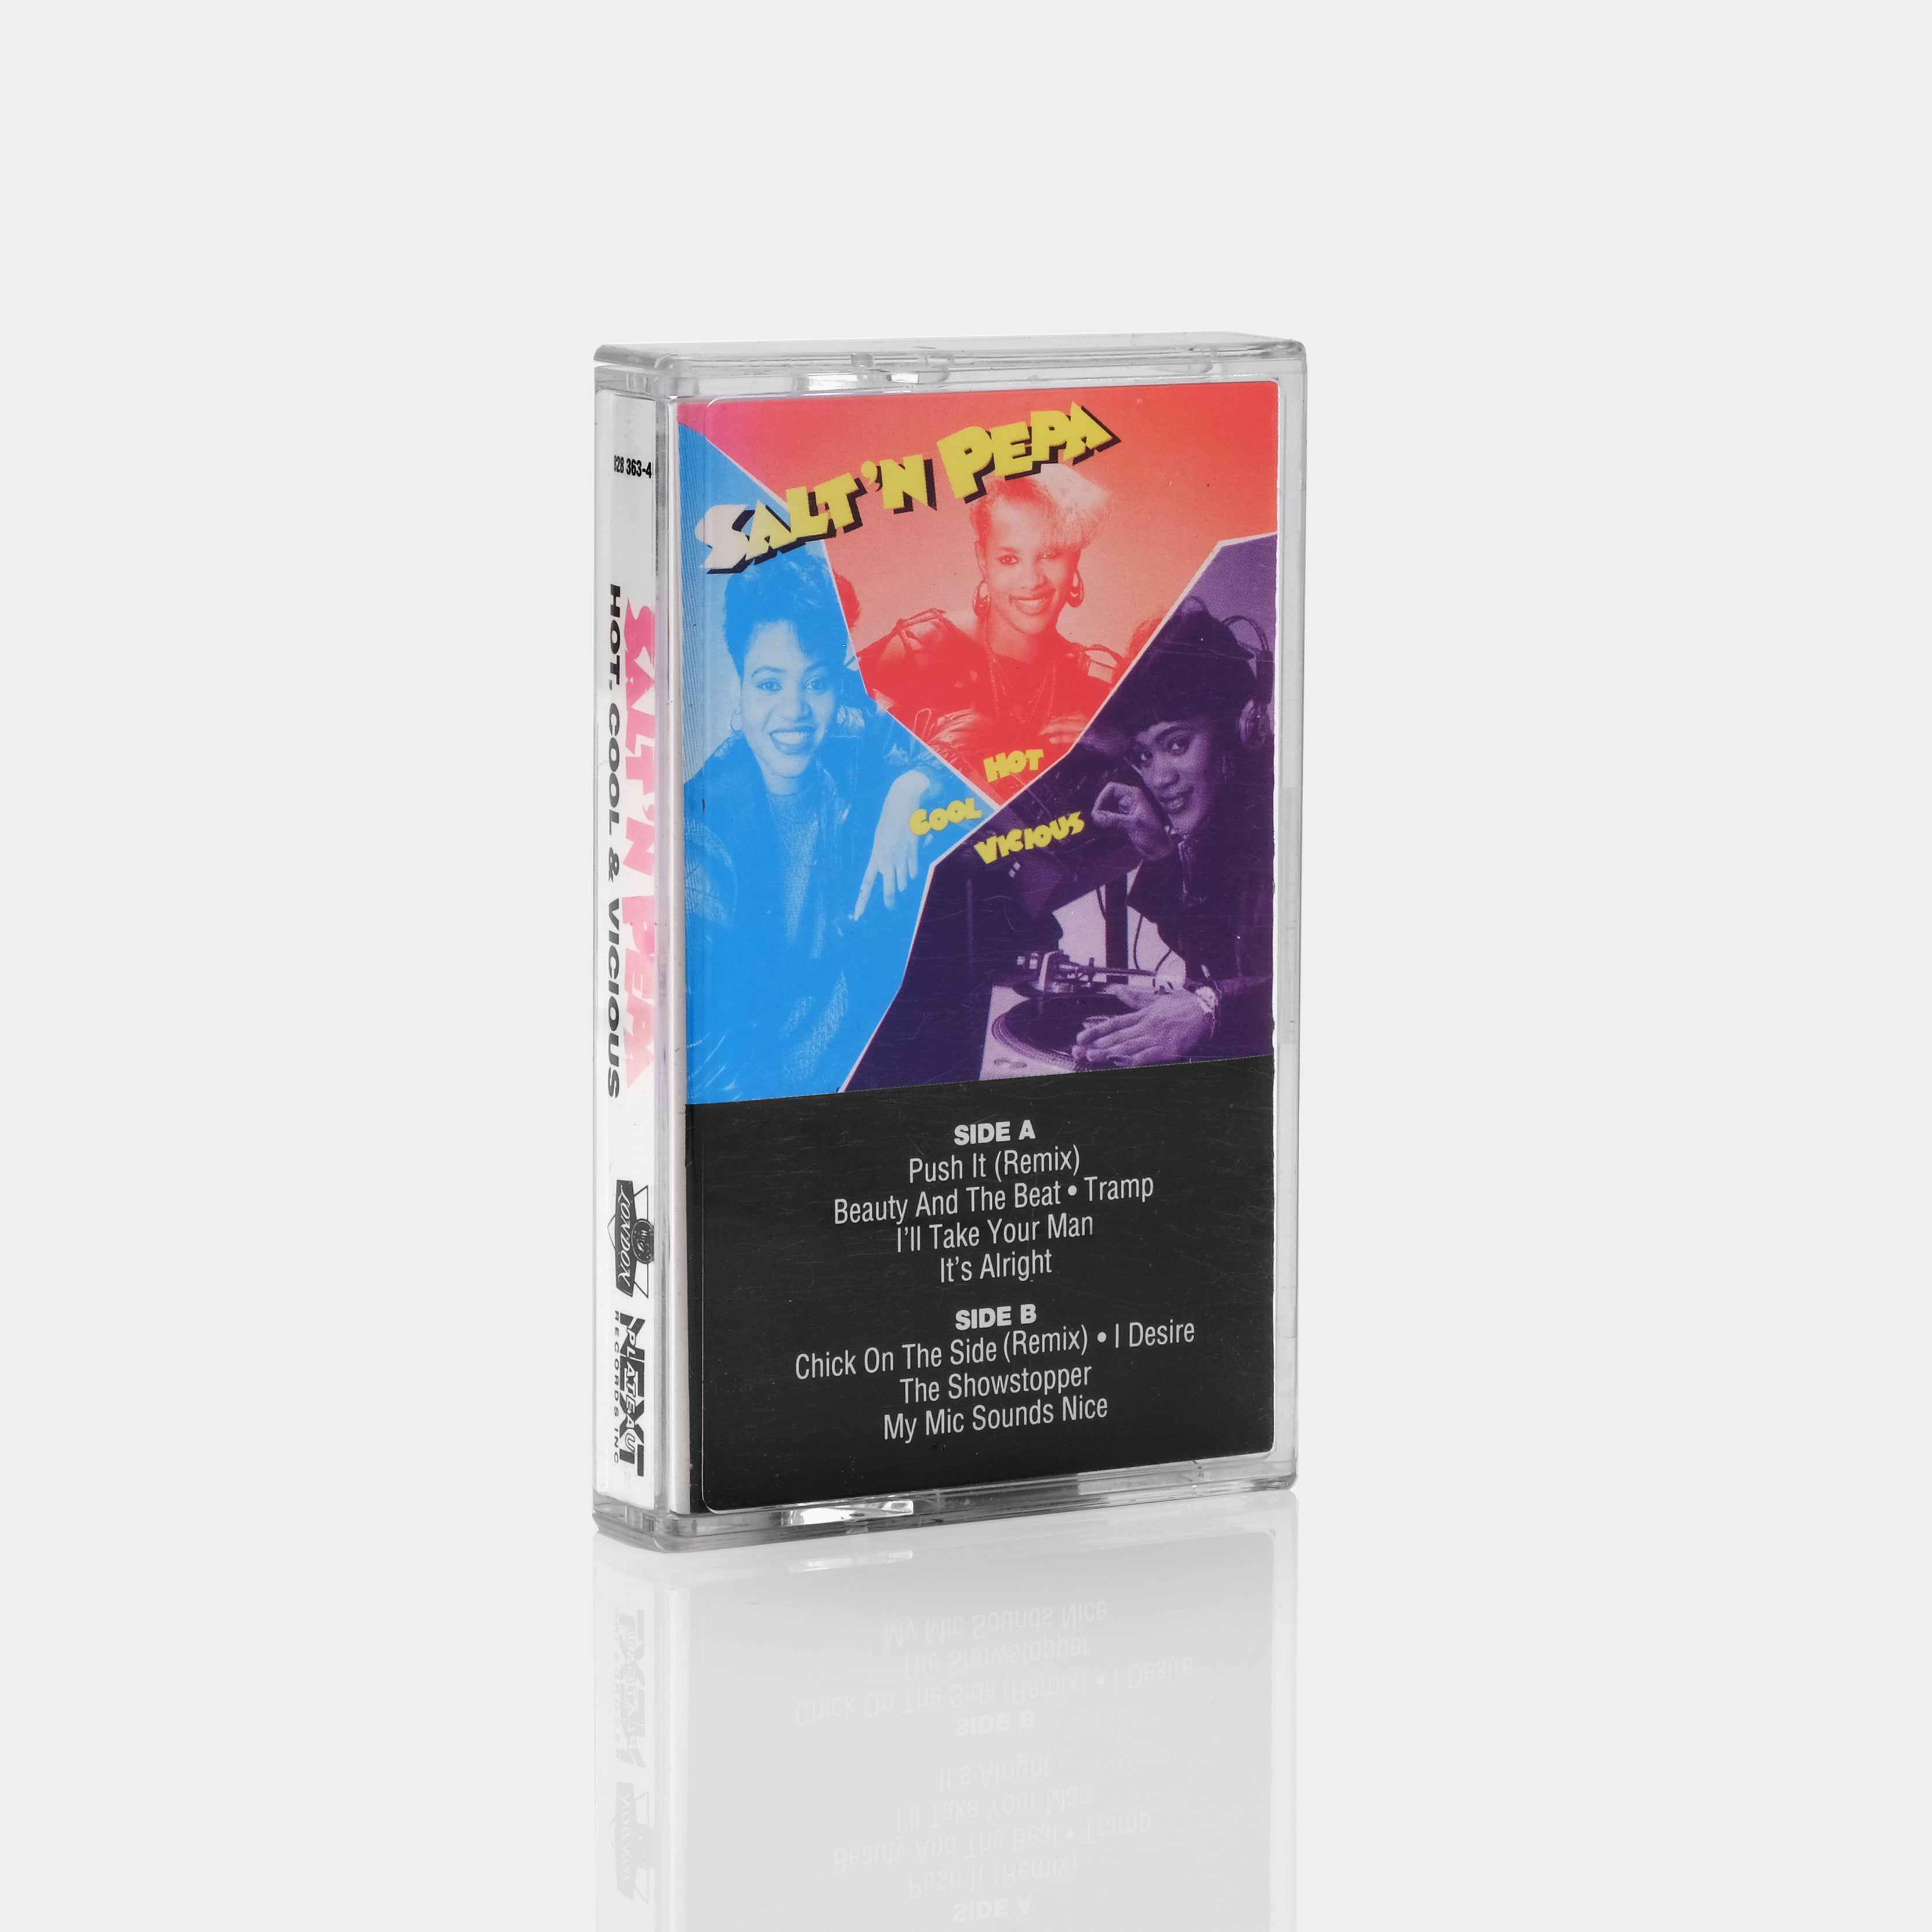 Salt 'N Pepa - Hot, Cool & Vicious Cassette Tape